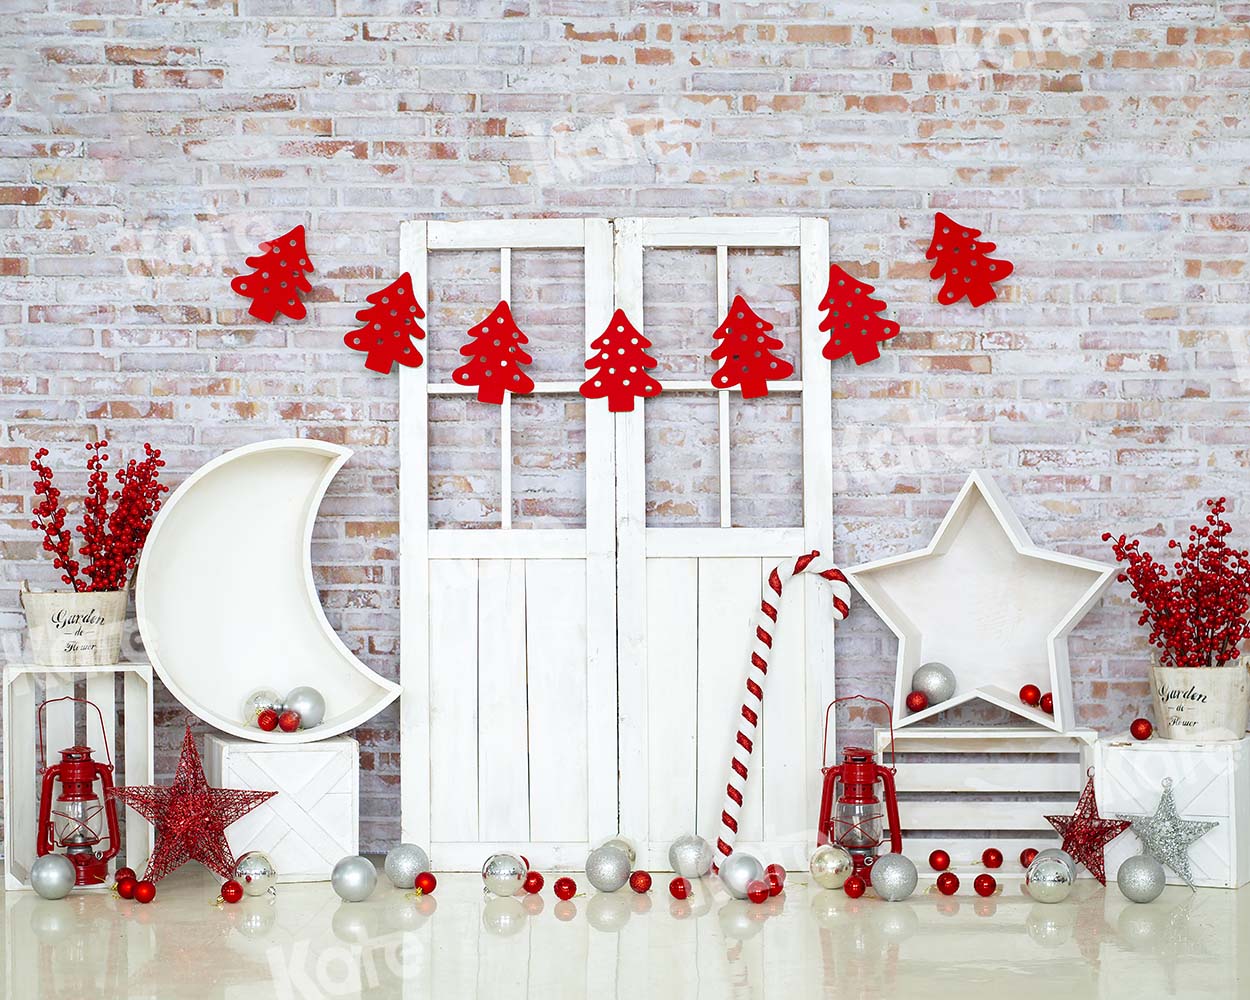 kateクリスマス赤い木の納屋のドア白いレンガの壁の背景